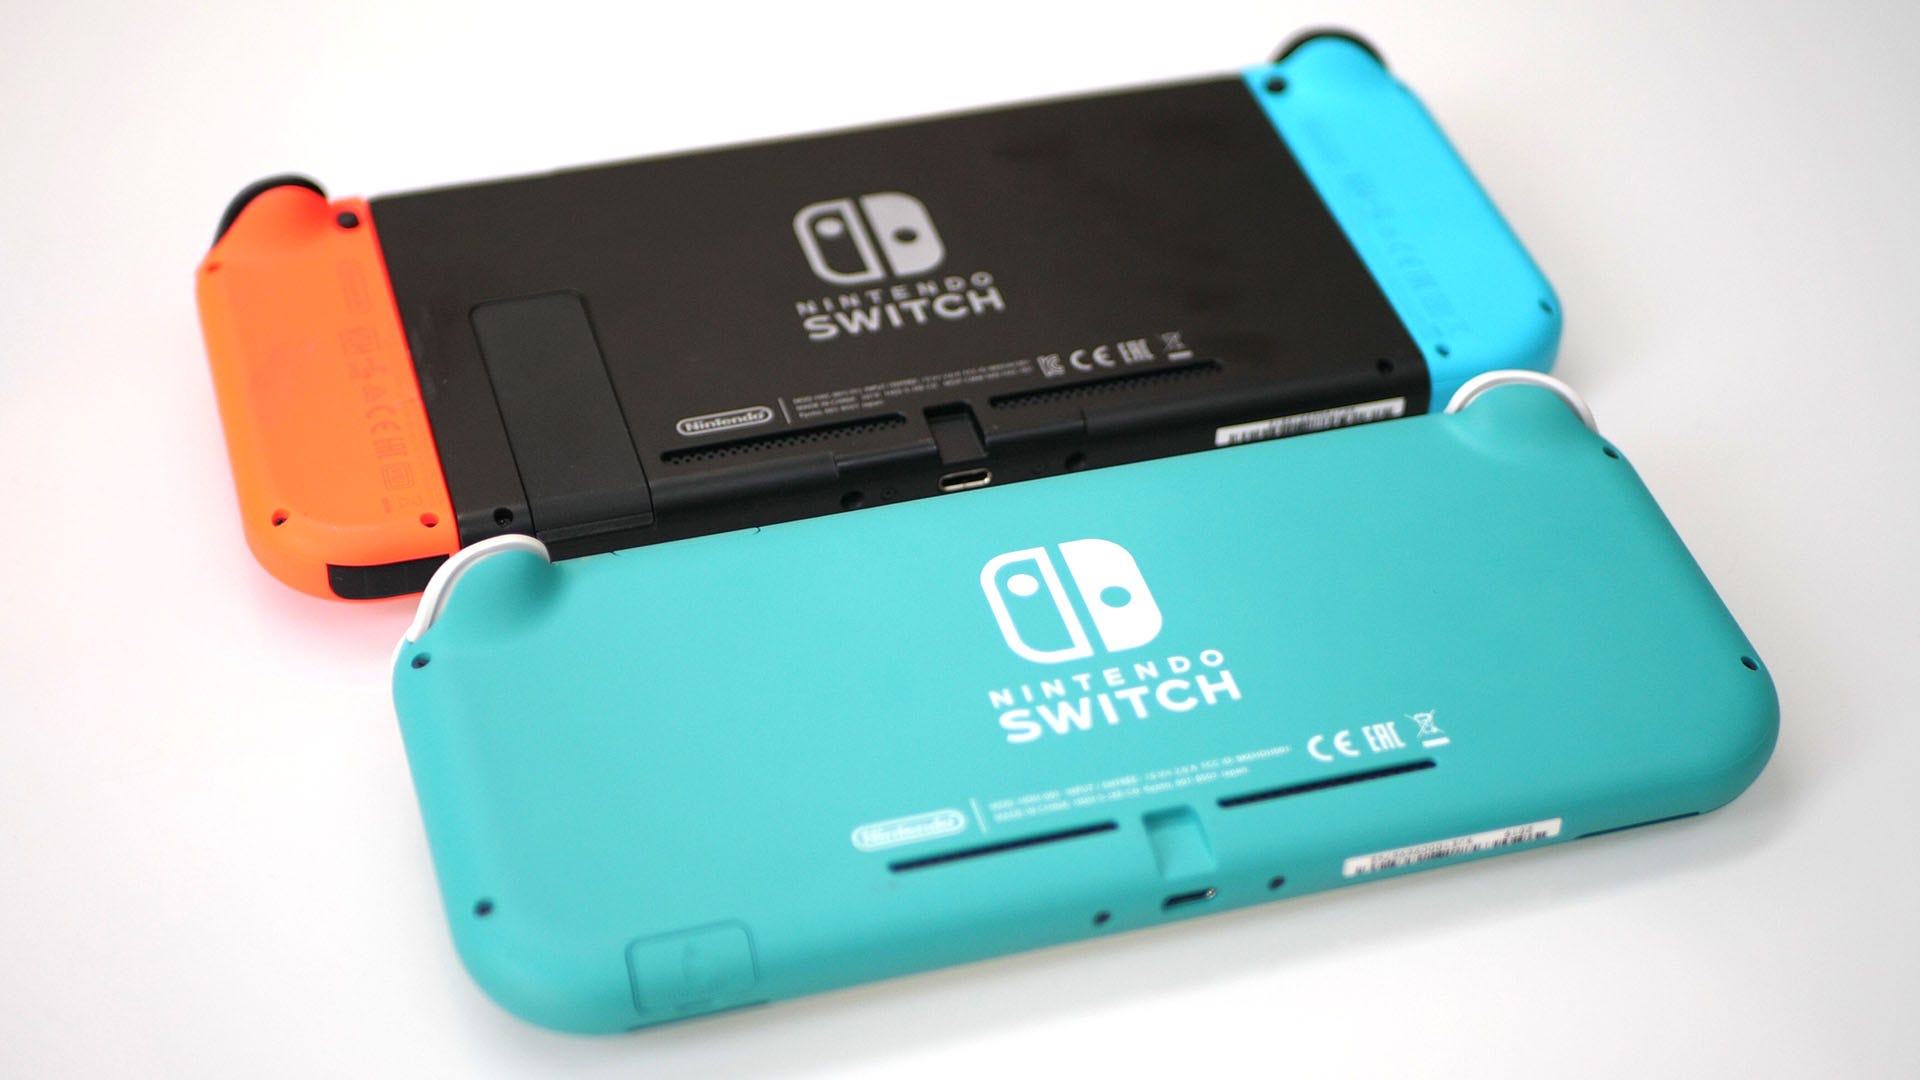 Nintendo Switch Lite Review 